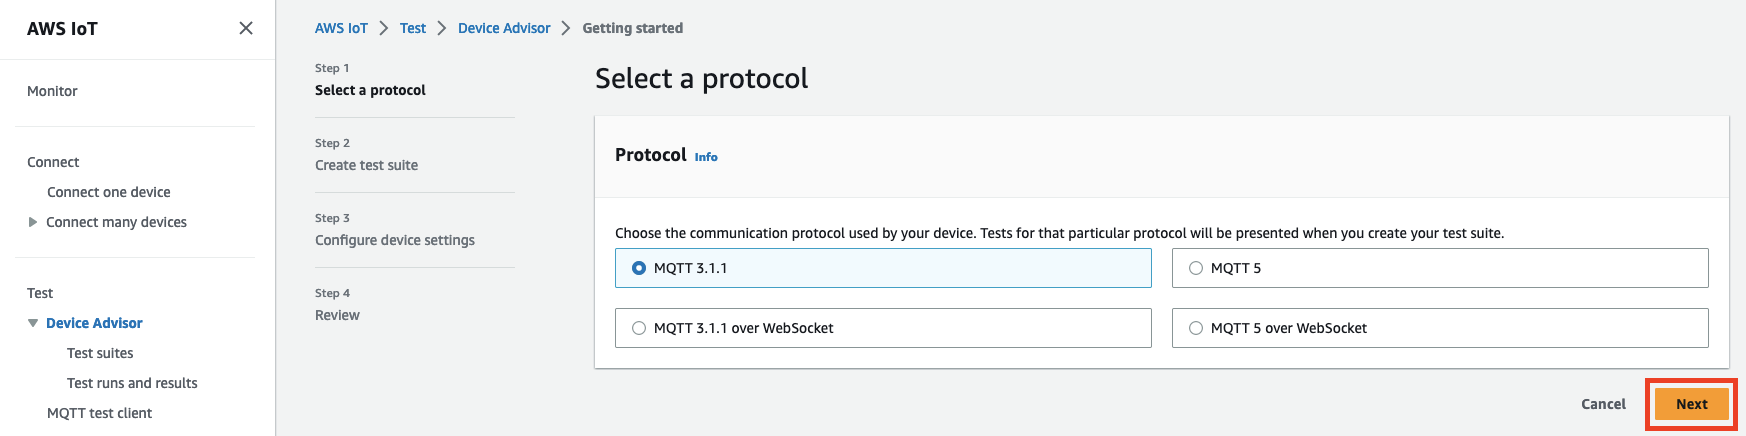 IoT 디바이스를 테스트하기 WebSocket 위한 통신 프로토콜 (MQTT 3.1.1, MQTT 3.1.1 오버, MQTT 5 WebSocket, MQTT 5 오버) 을 선택하는 옵션을 보여주는 디바이스 어드바이저 인터페이스입니다.